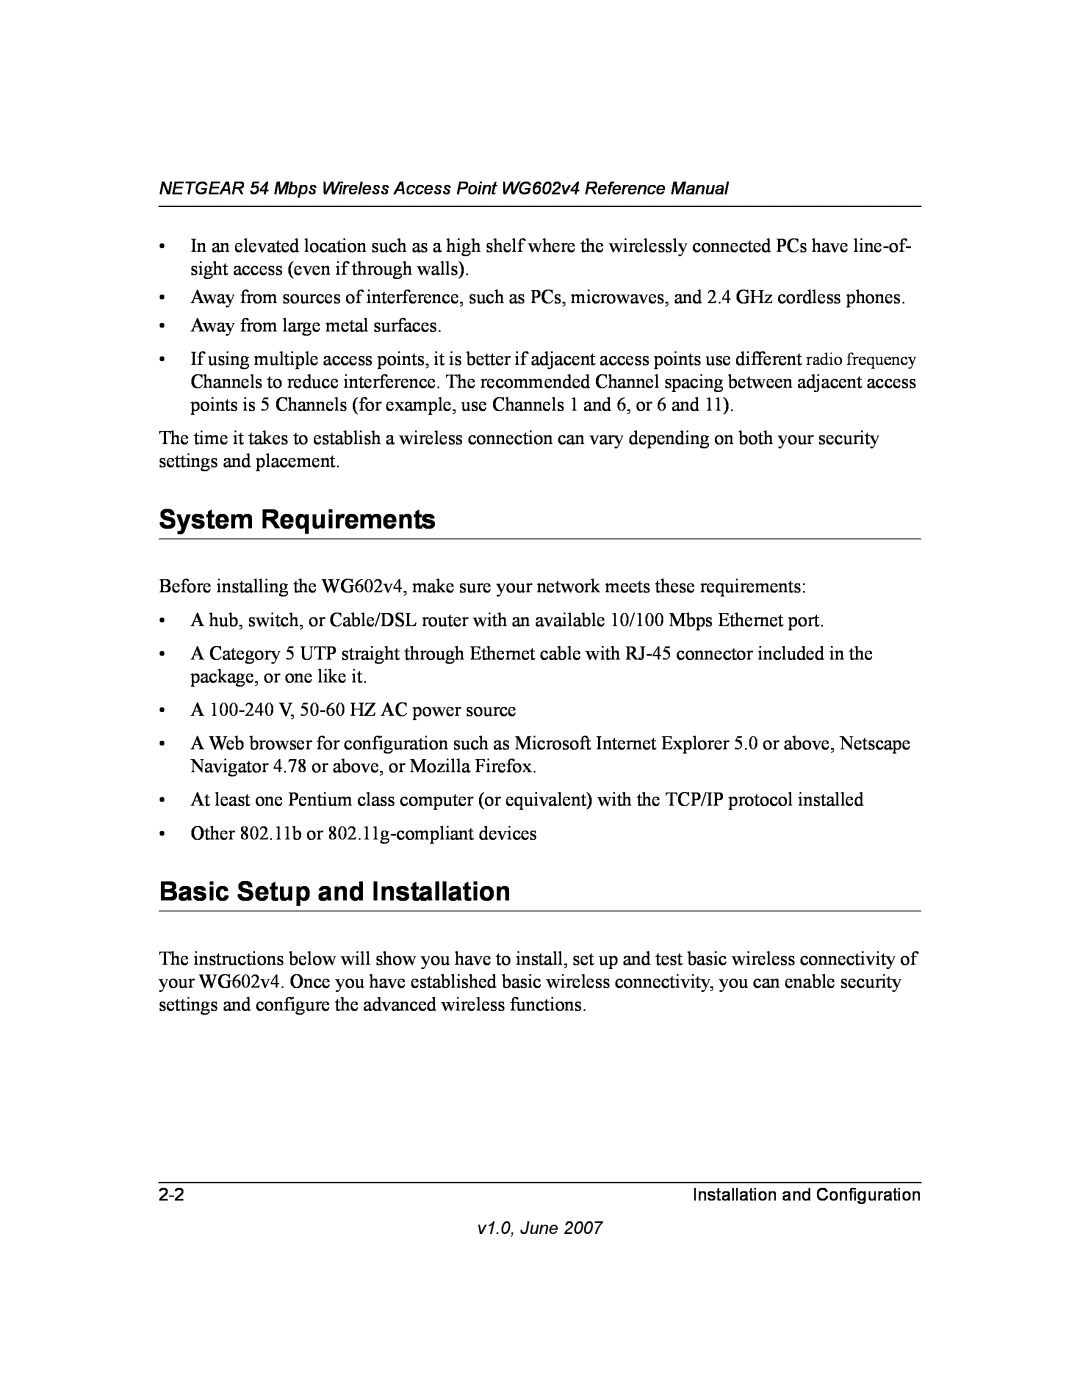 NETGEAR WG602V4 manual System Requirements, Basic Setup and Installation 